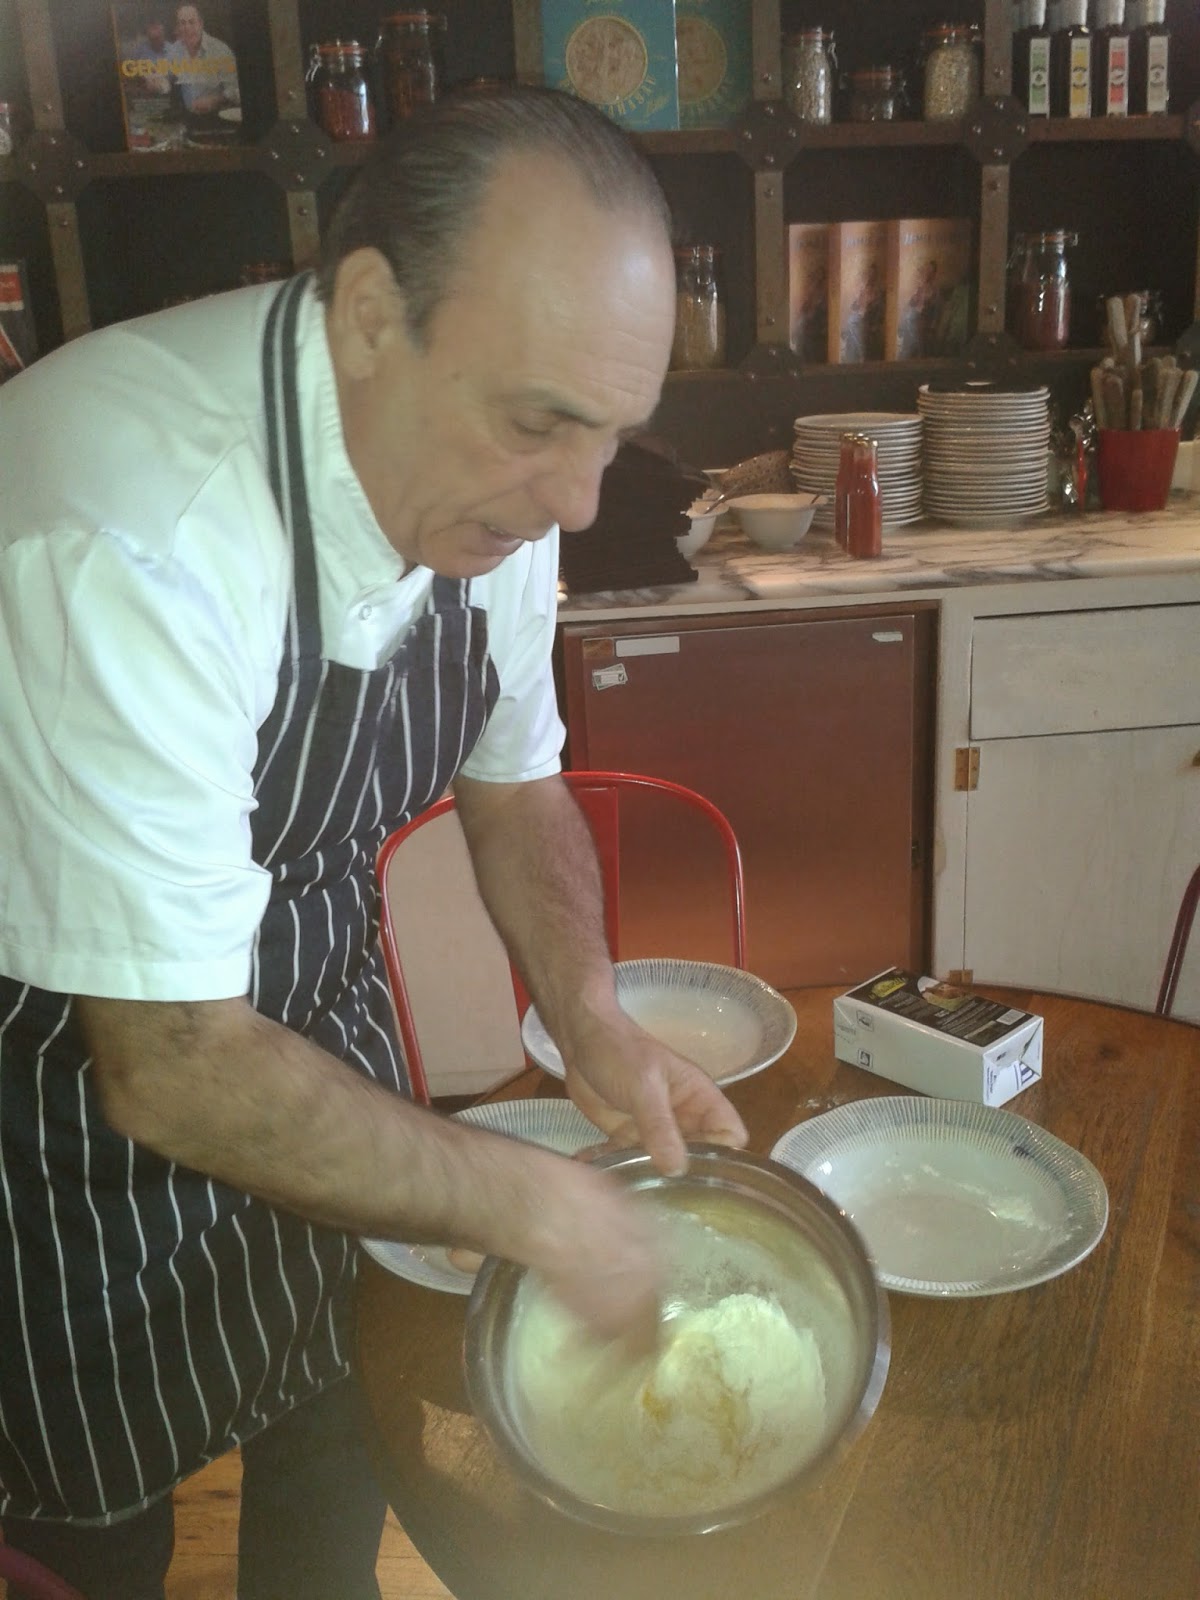 Gennaro Contaldo mixing pasta dough by hand